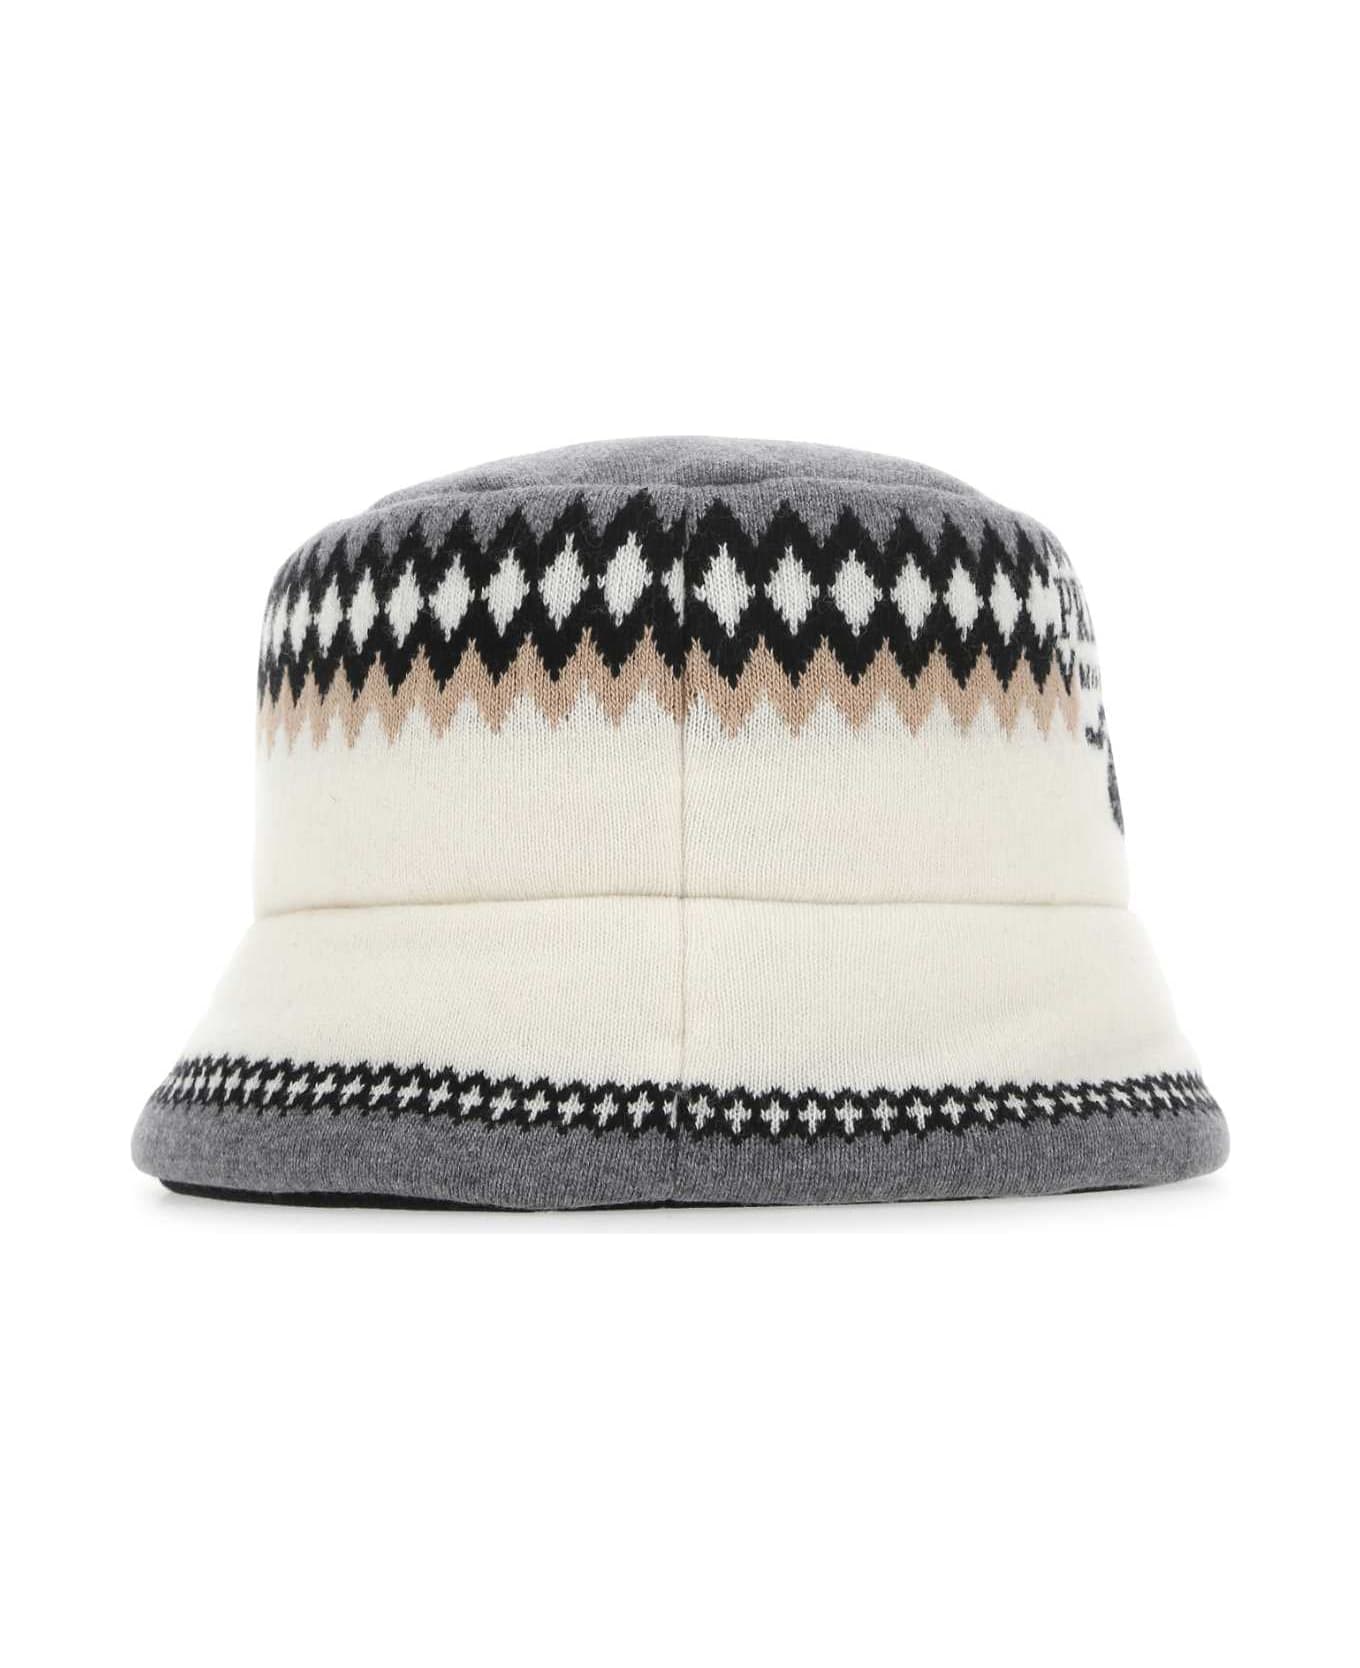 Prada Embroidered Wool Blend Hat - CAMMELLO 帽子